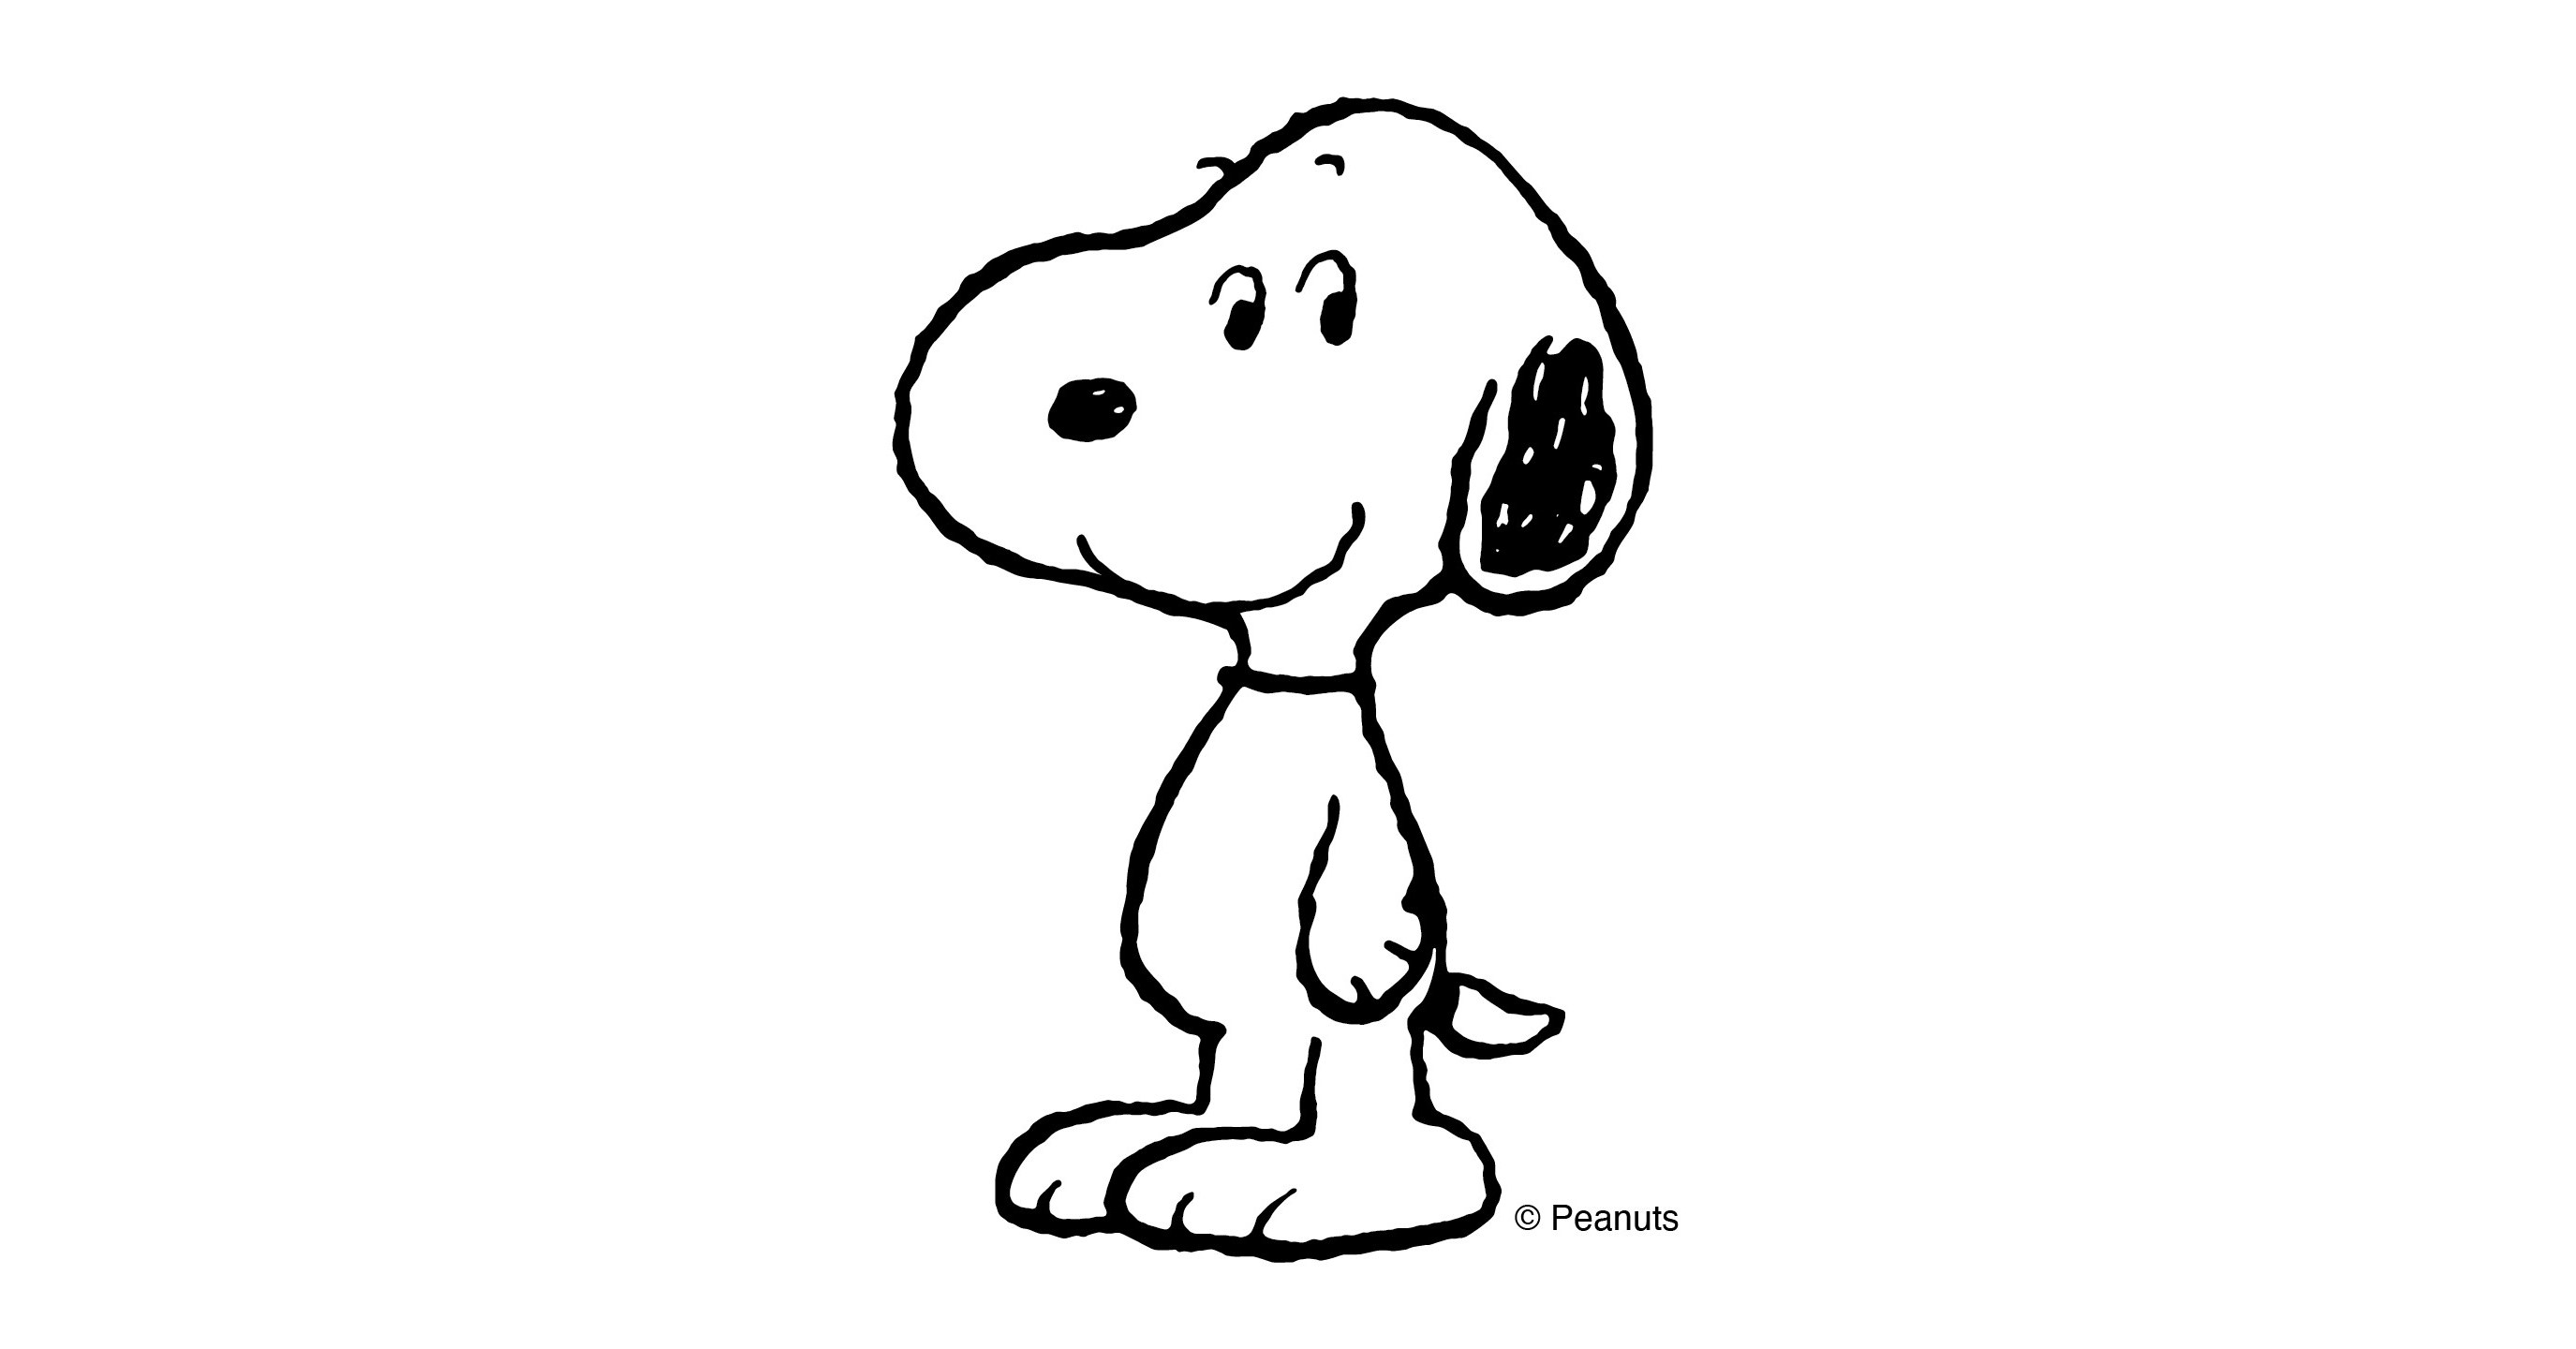 Peanuts / Snoopy